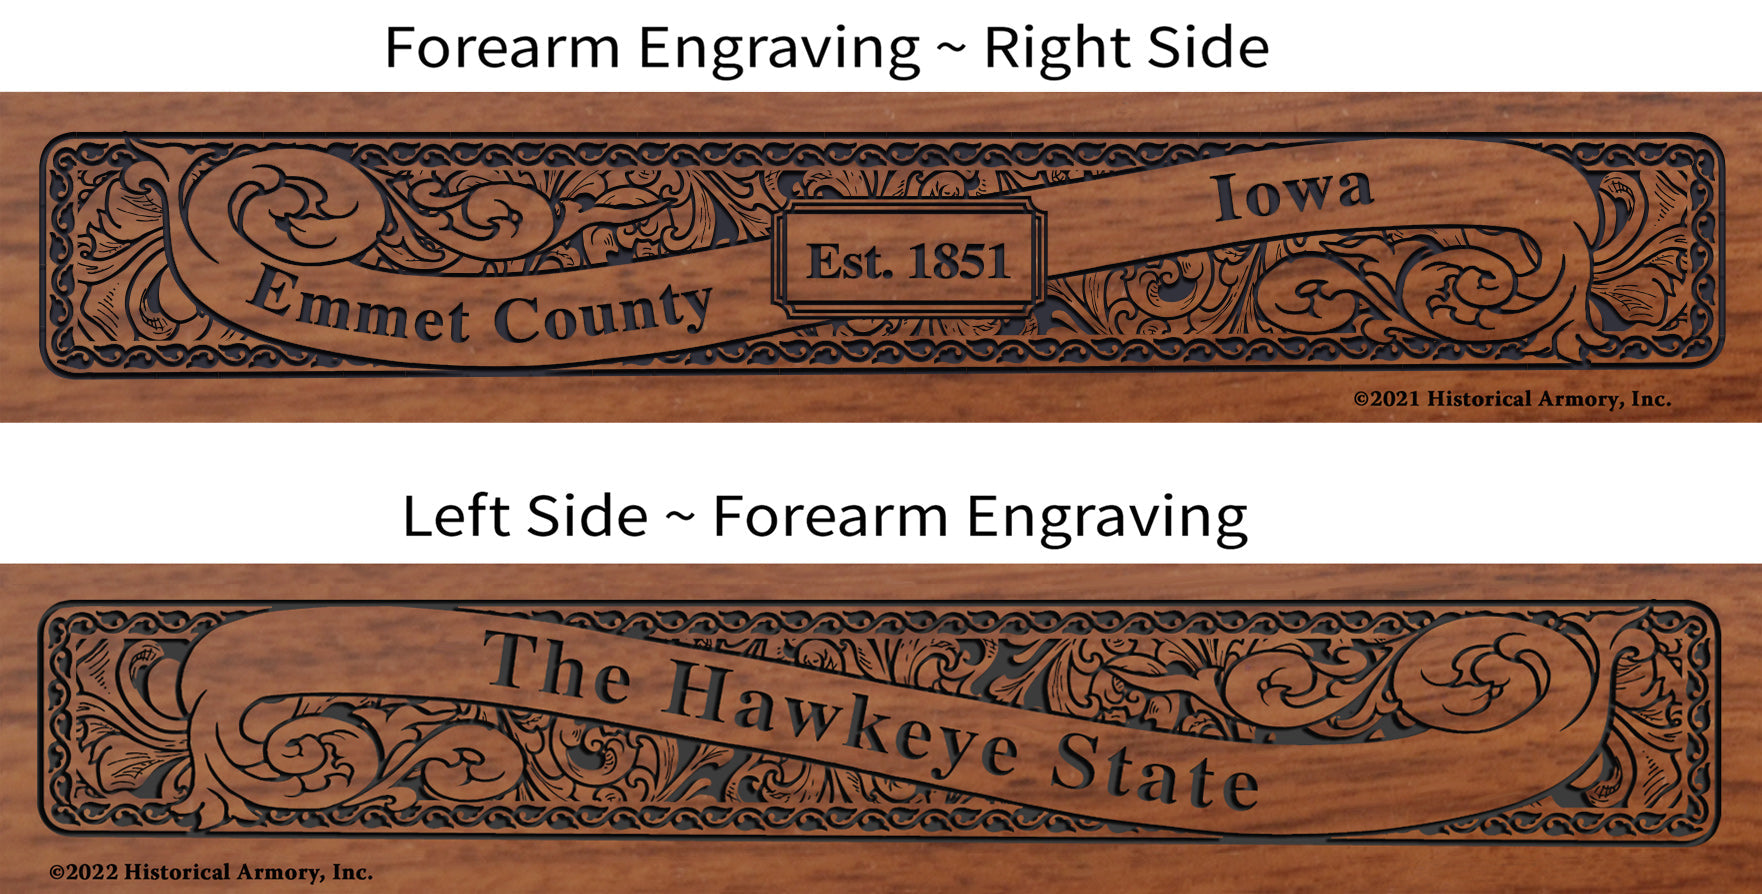 Emmet County Iowa Engraved Rifle Forearm